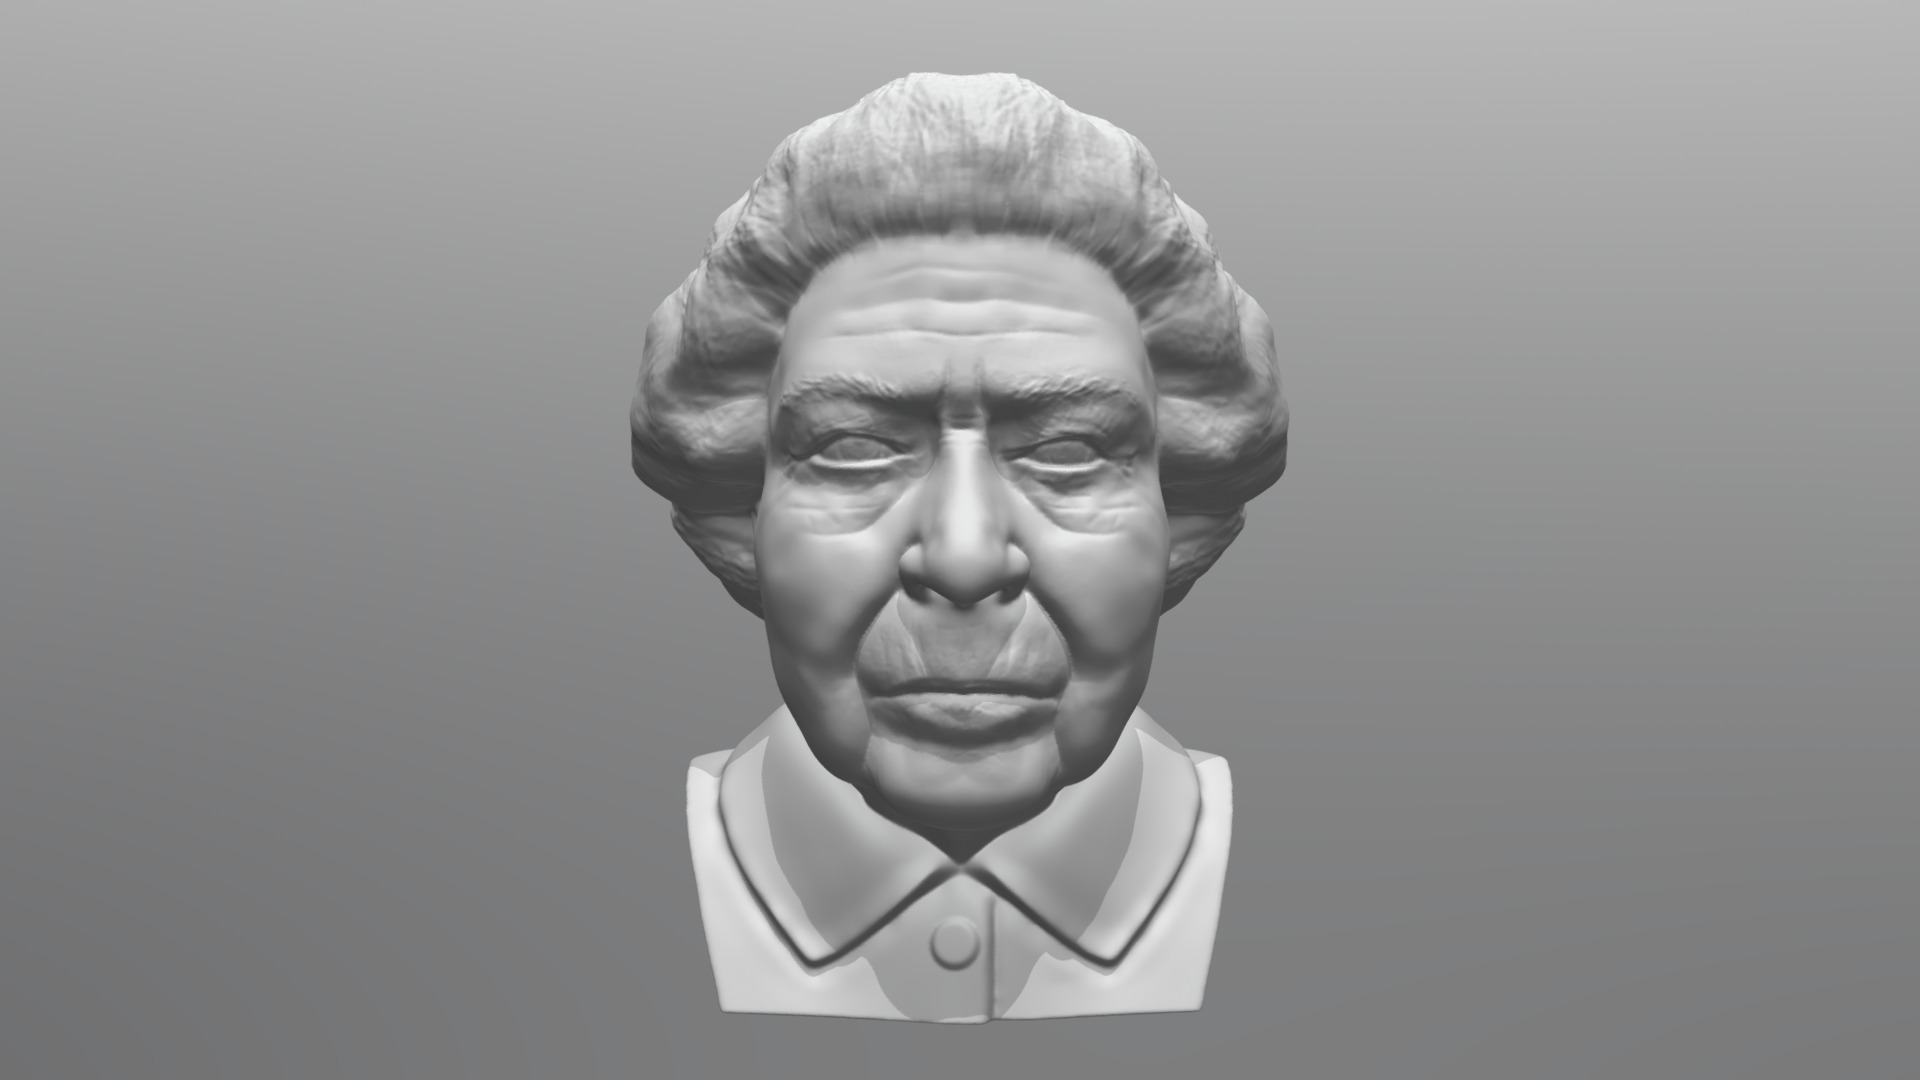 3D model Queen Elizabeth bust for 3D printing - This is a 3D model of the Queen Elizabeth bust for 3D printing. The 3D model is about a man wearing a hat.